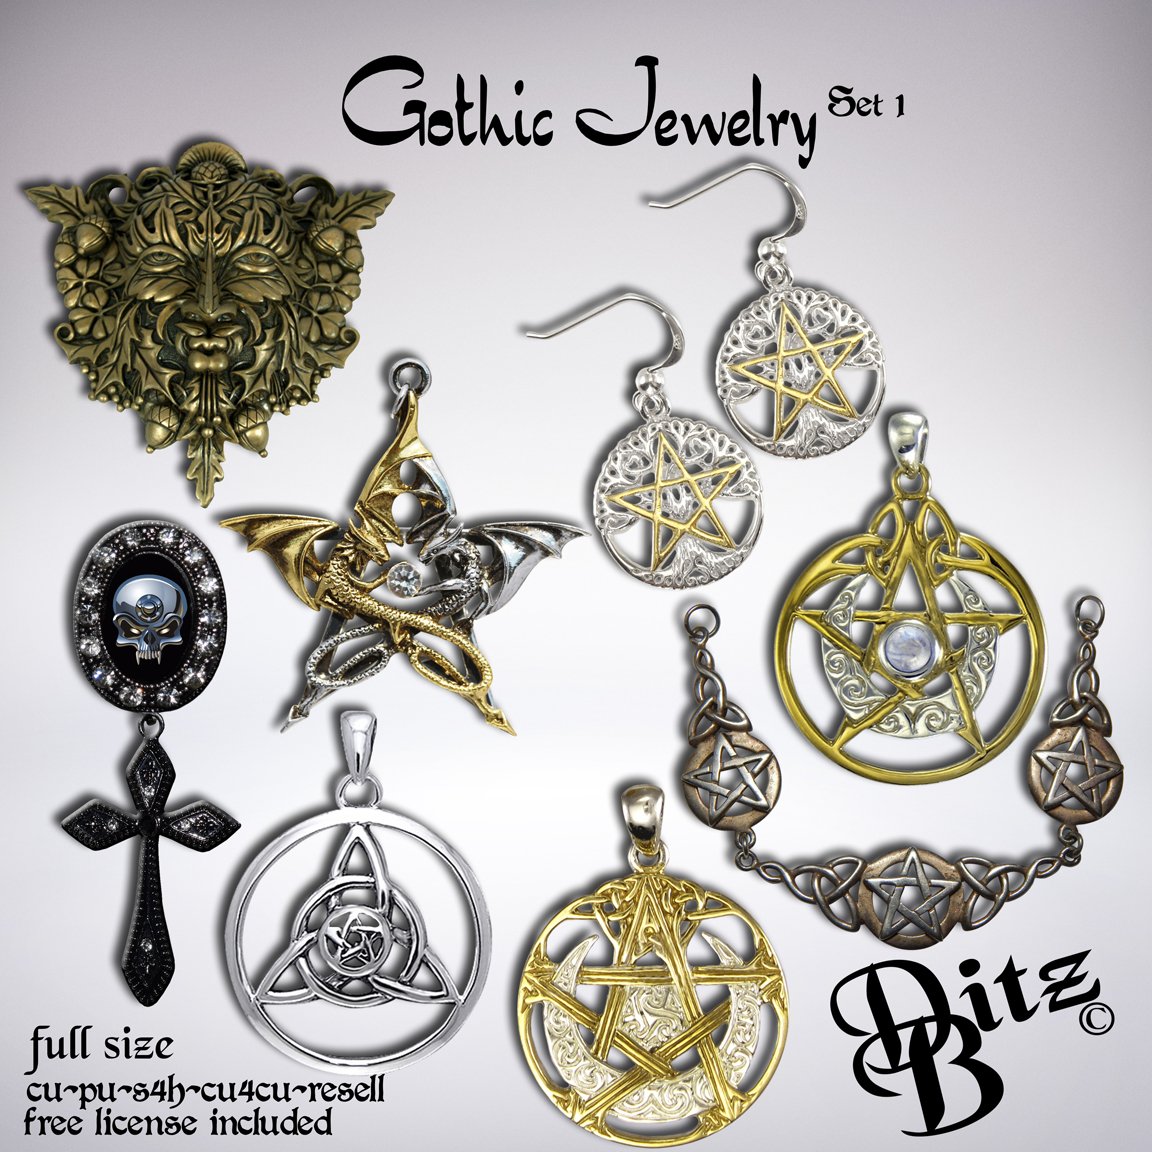 Gothic Jewelry Set 1 - Payhip